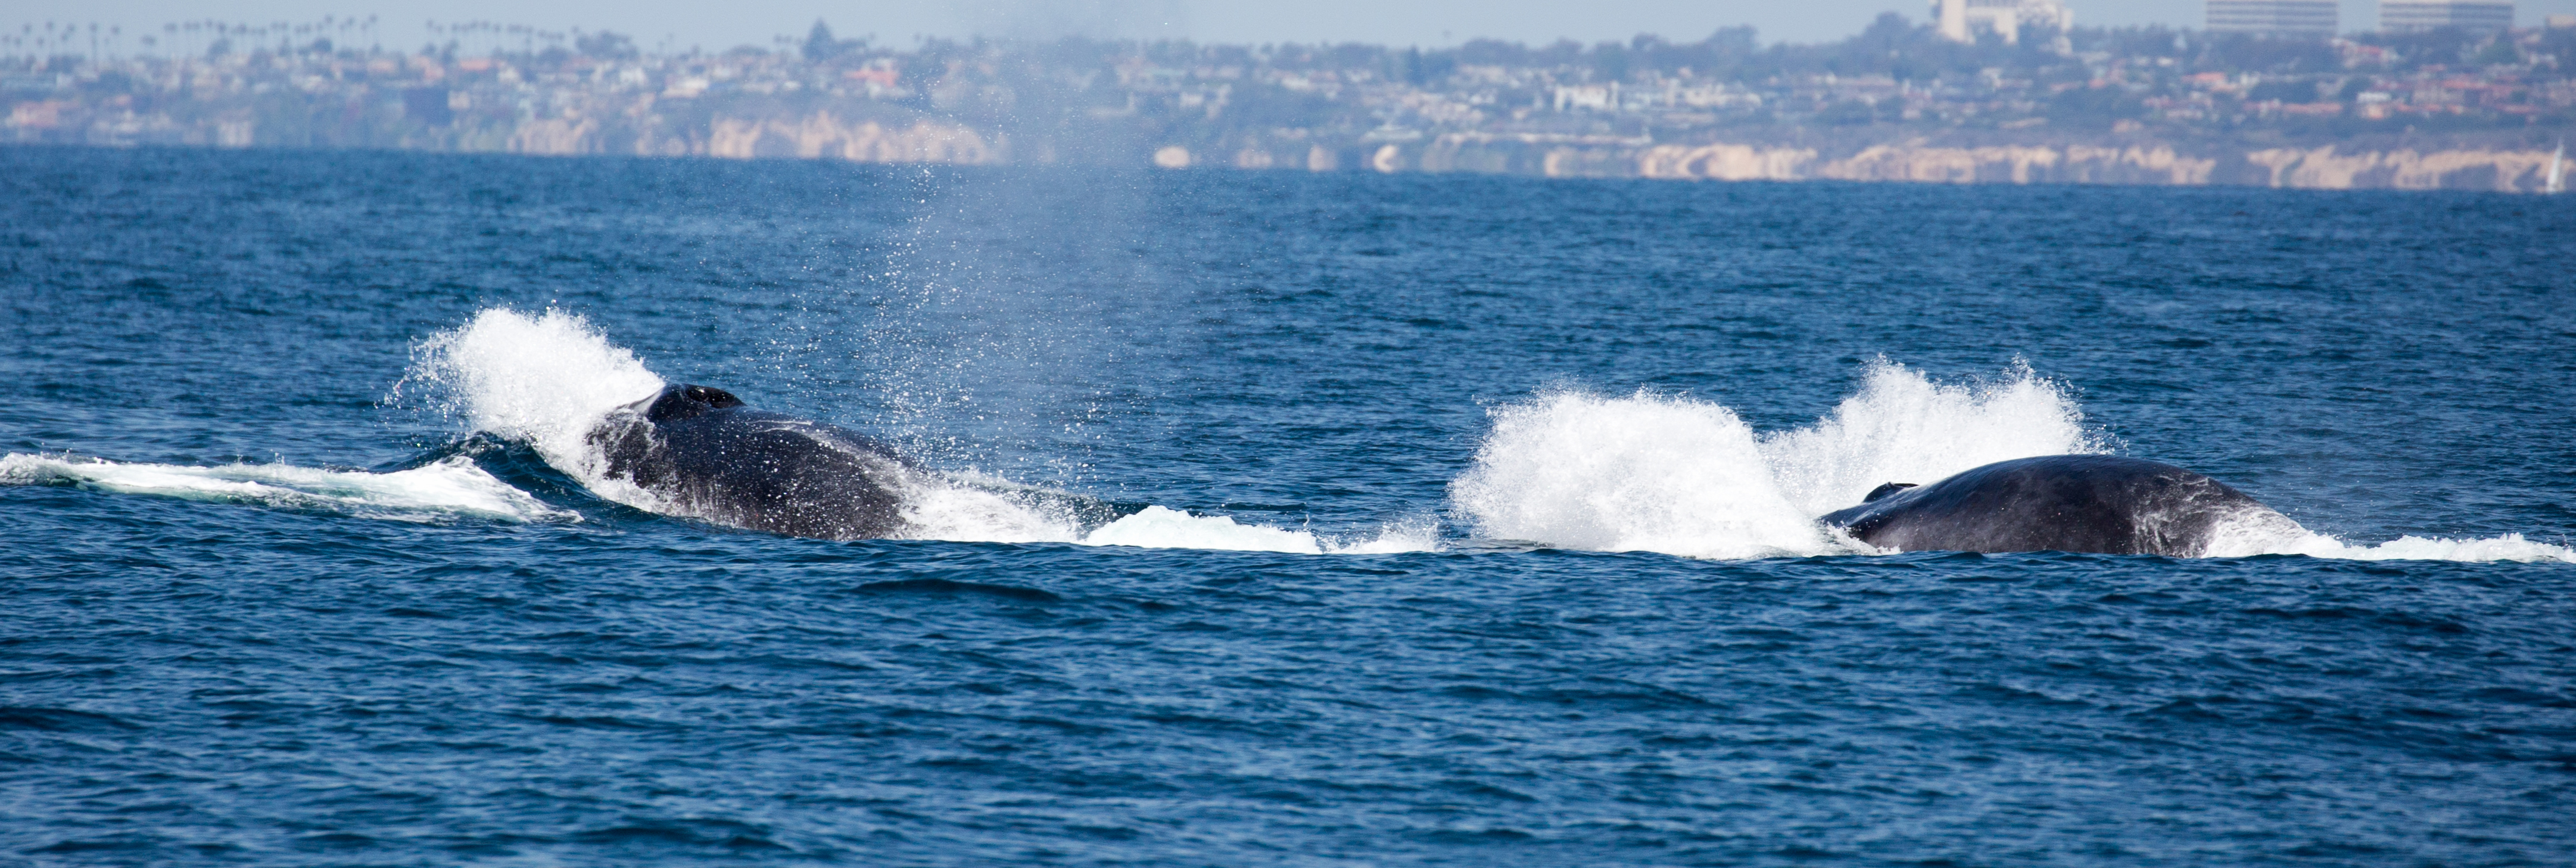 finback-whale-watching-Marina-del-Rey-tours